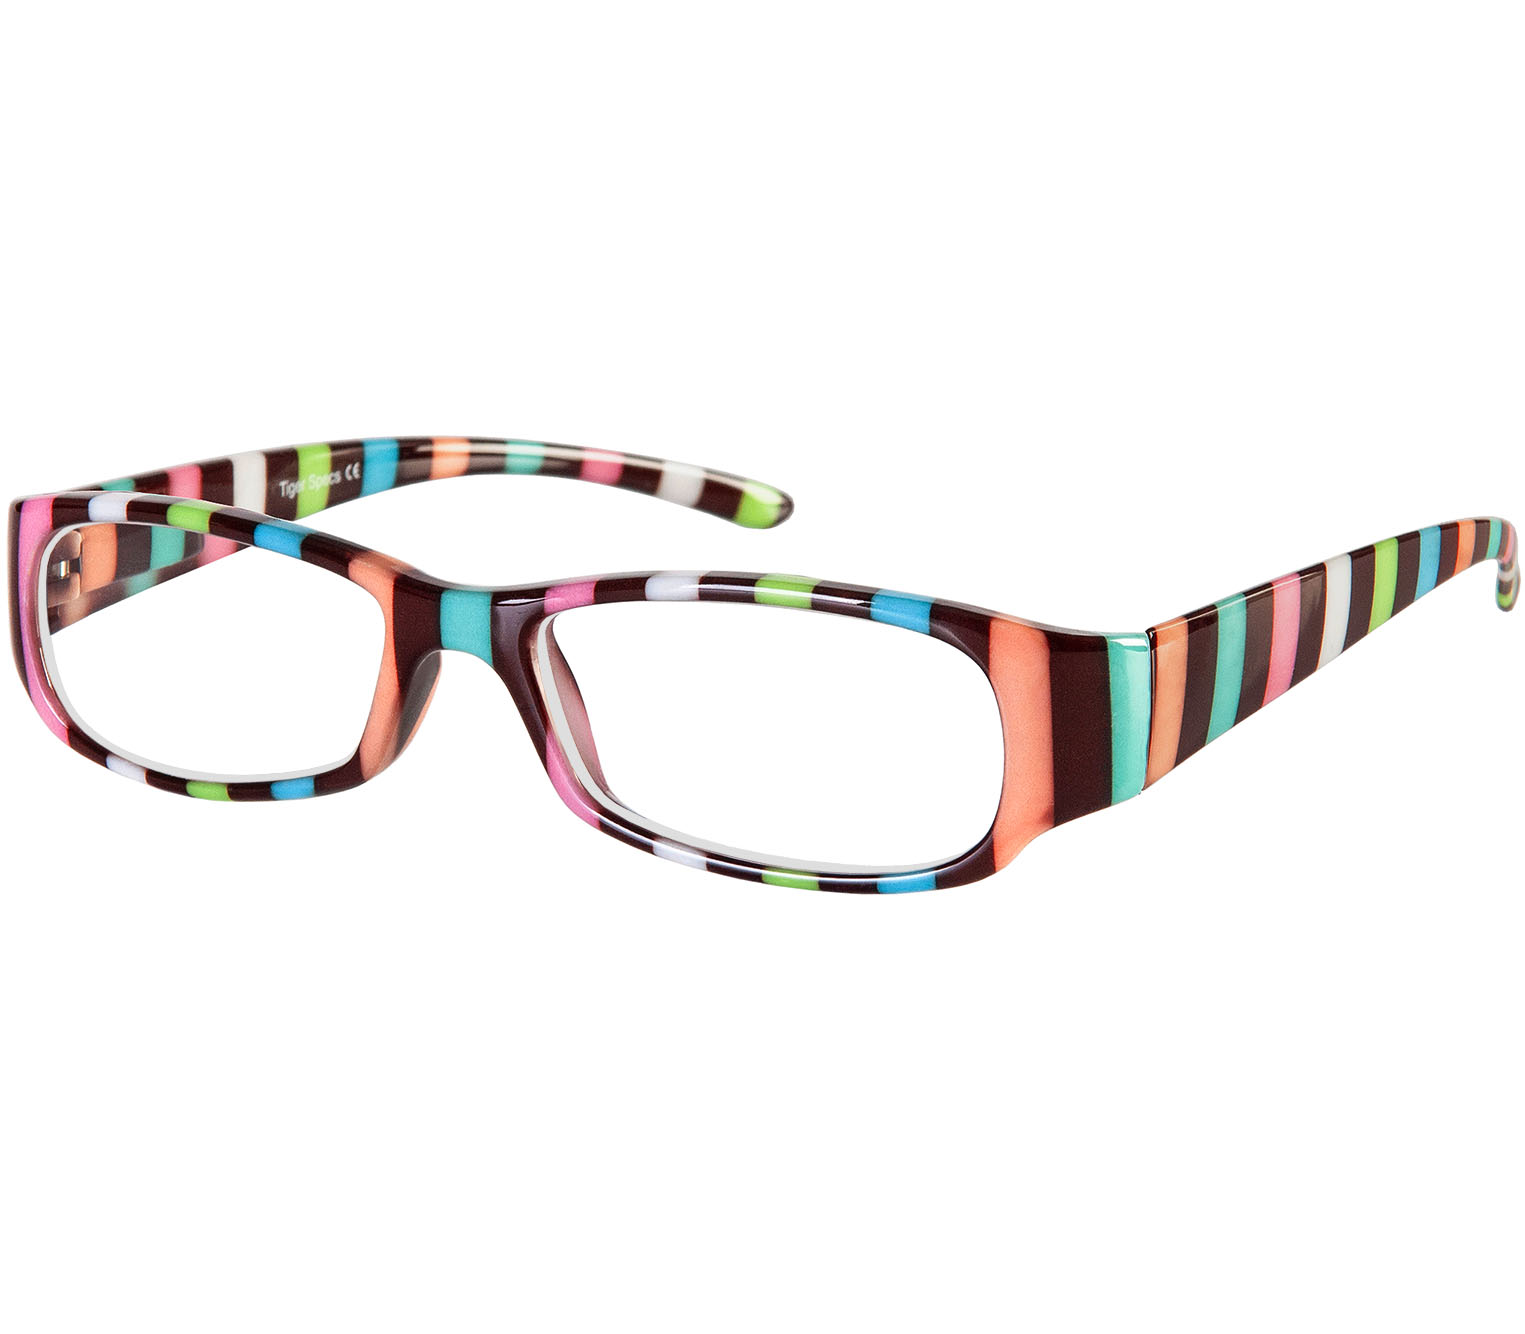 Main Image (Angle) - Shandy (Multi-coloured) Fashion Reading Glasses